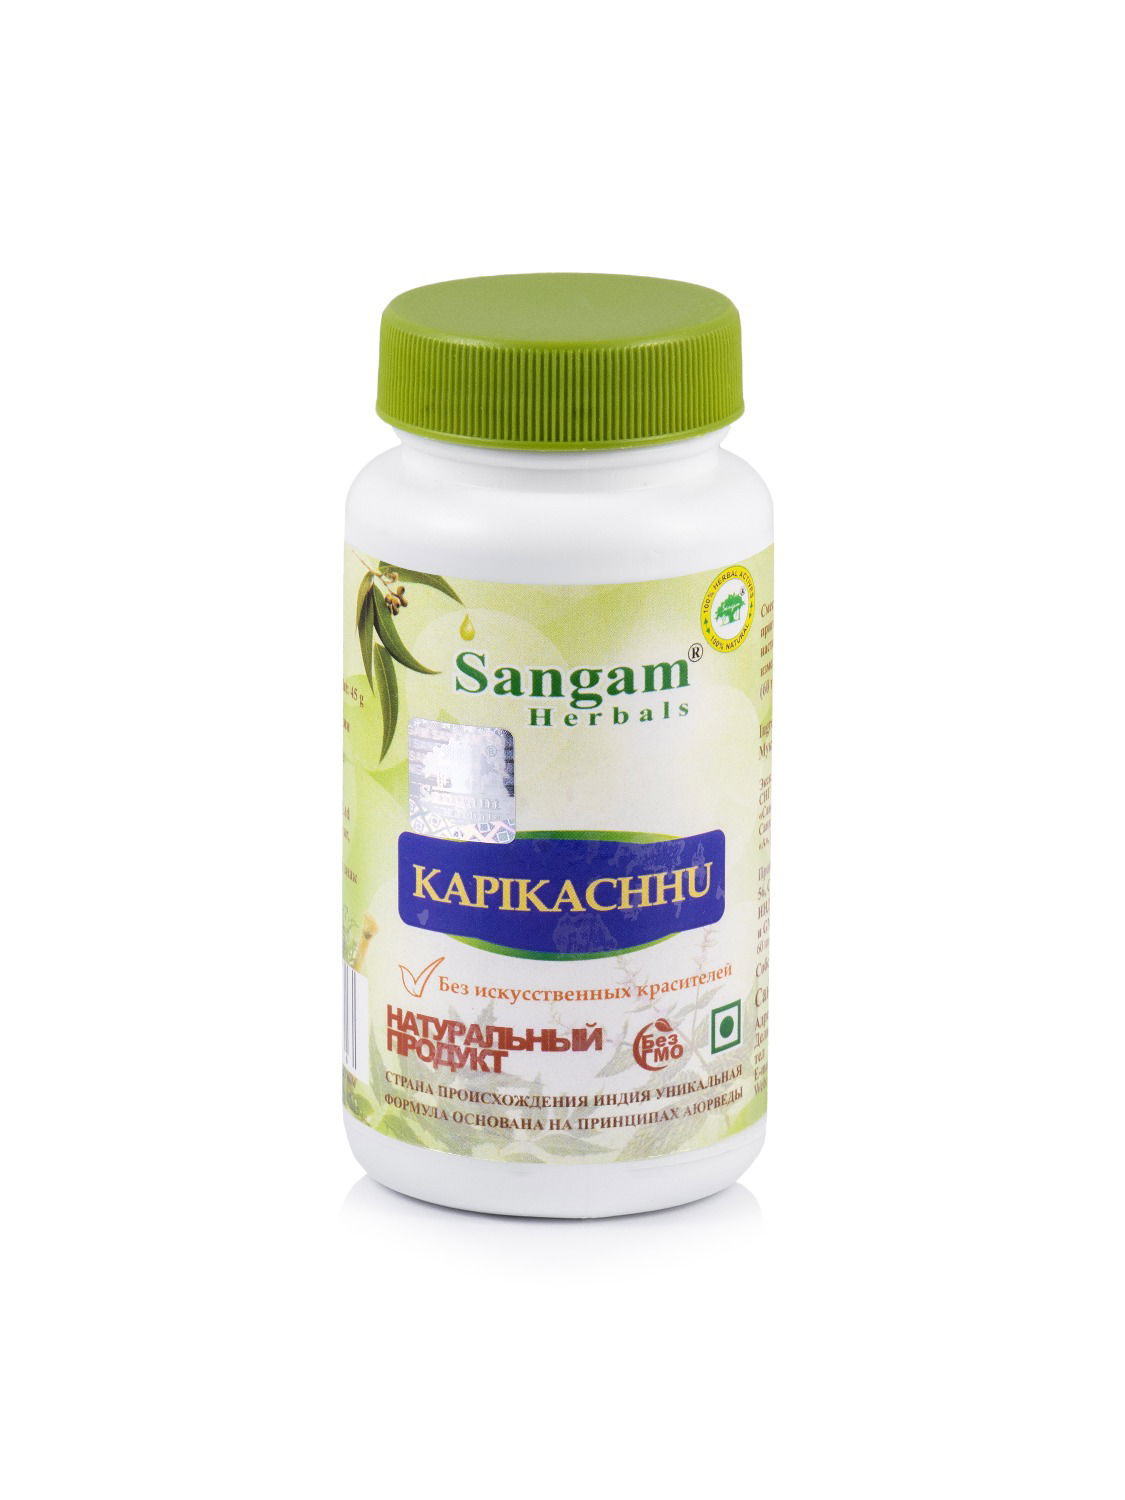 Капикачху Sangam Herbals (60 таблеток). 